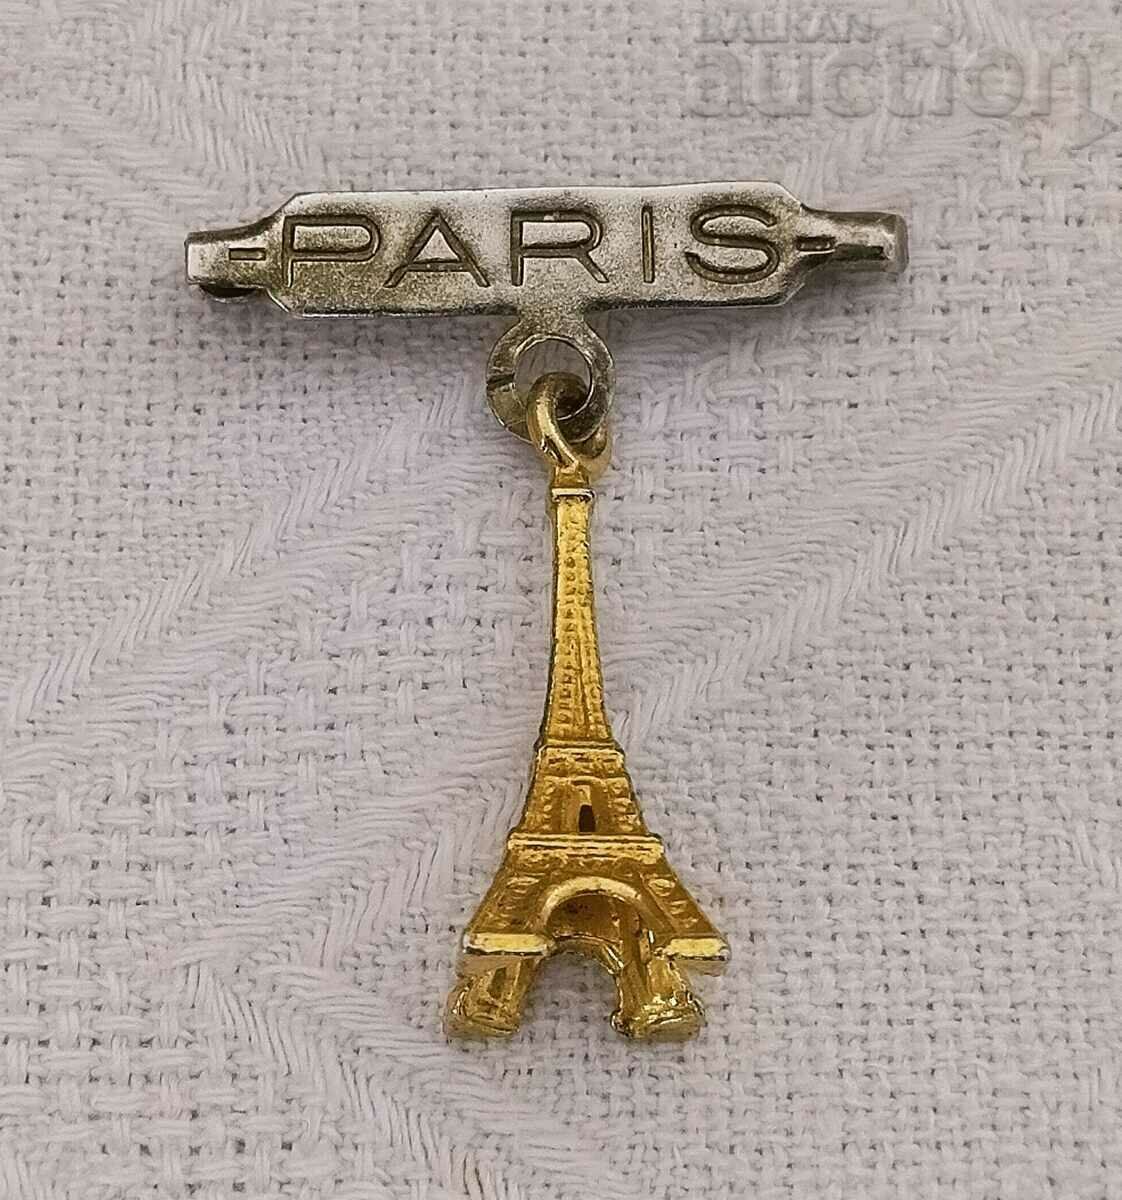 PARIS PARIS EIFFEL TOWER BADGE